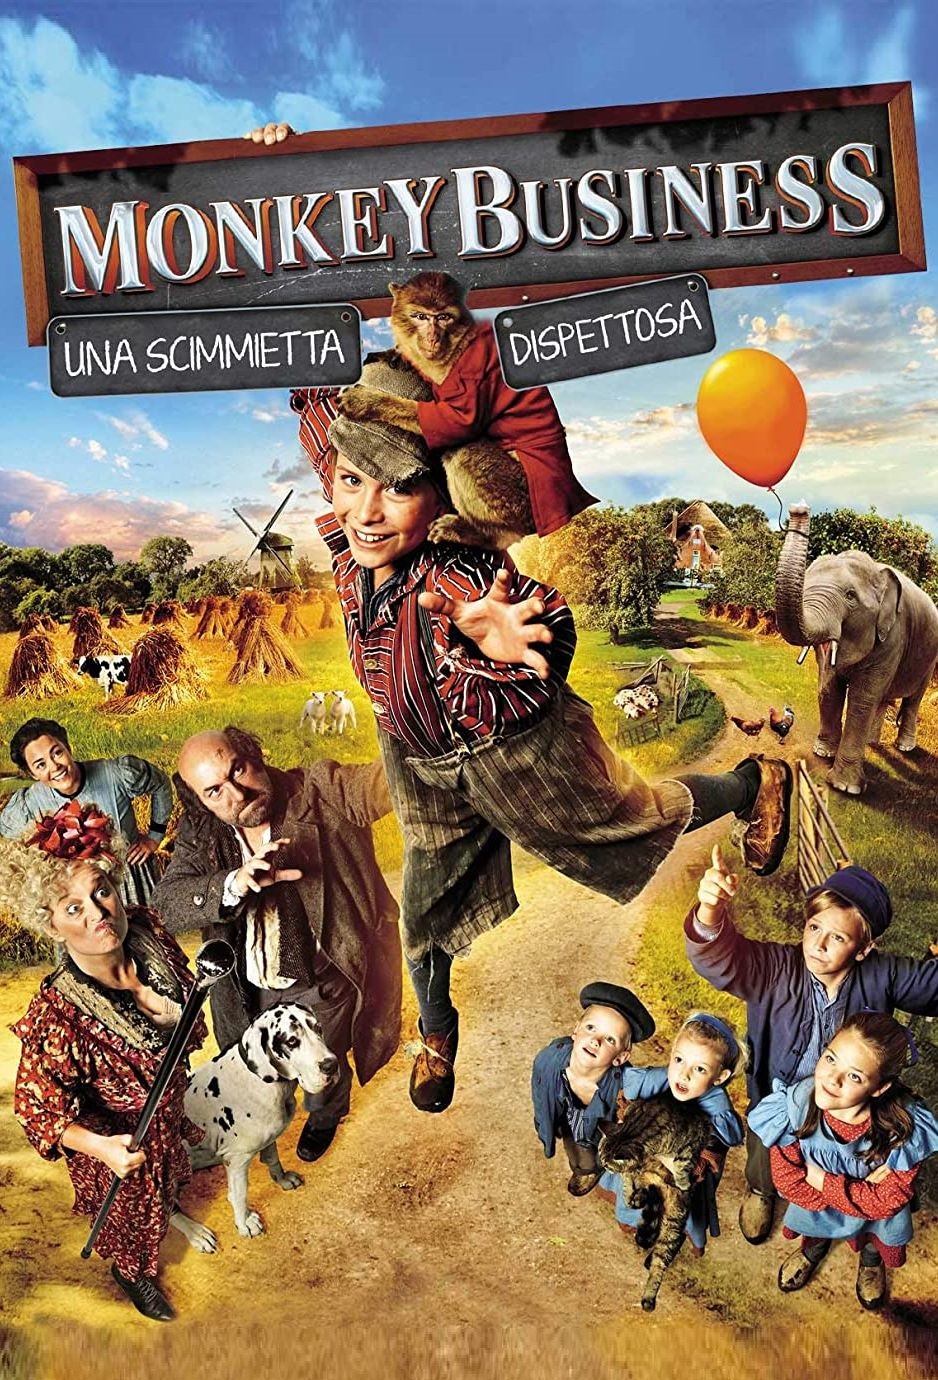 Monkey Business – Una scimmietta dispettosa [HD] (2015)